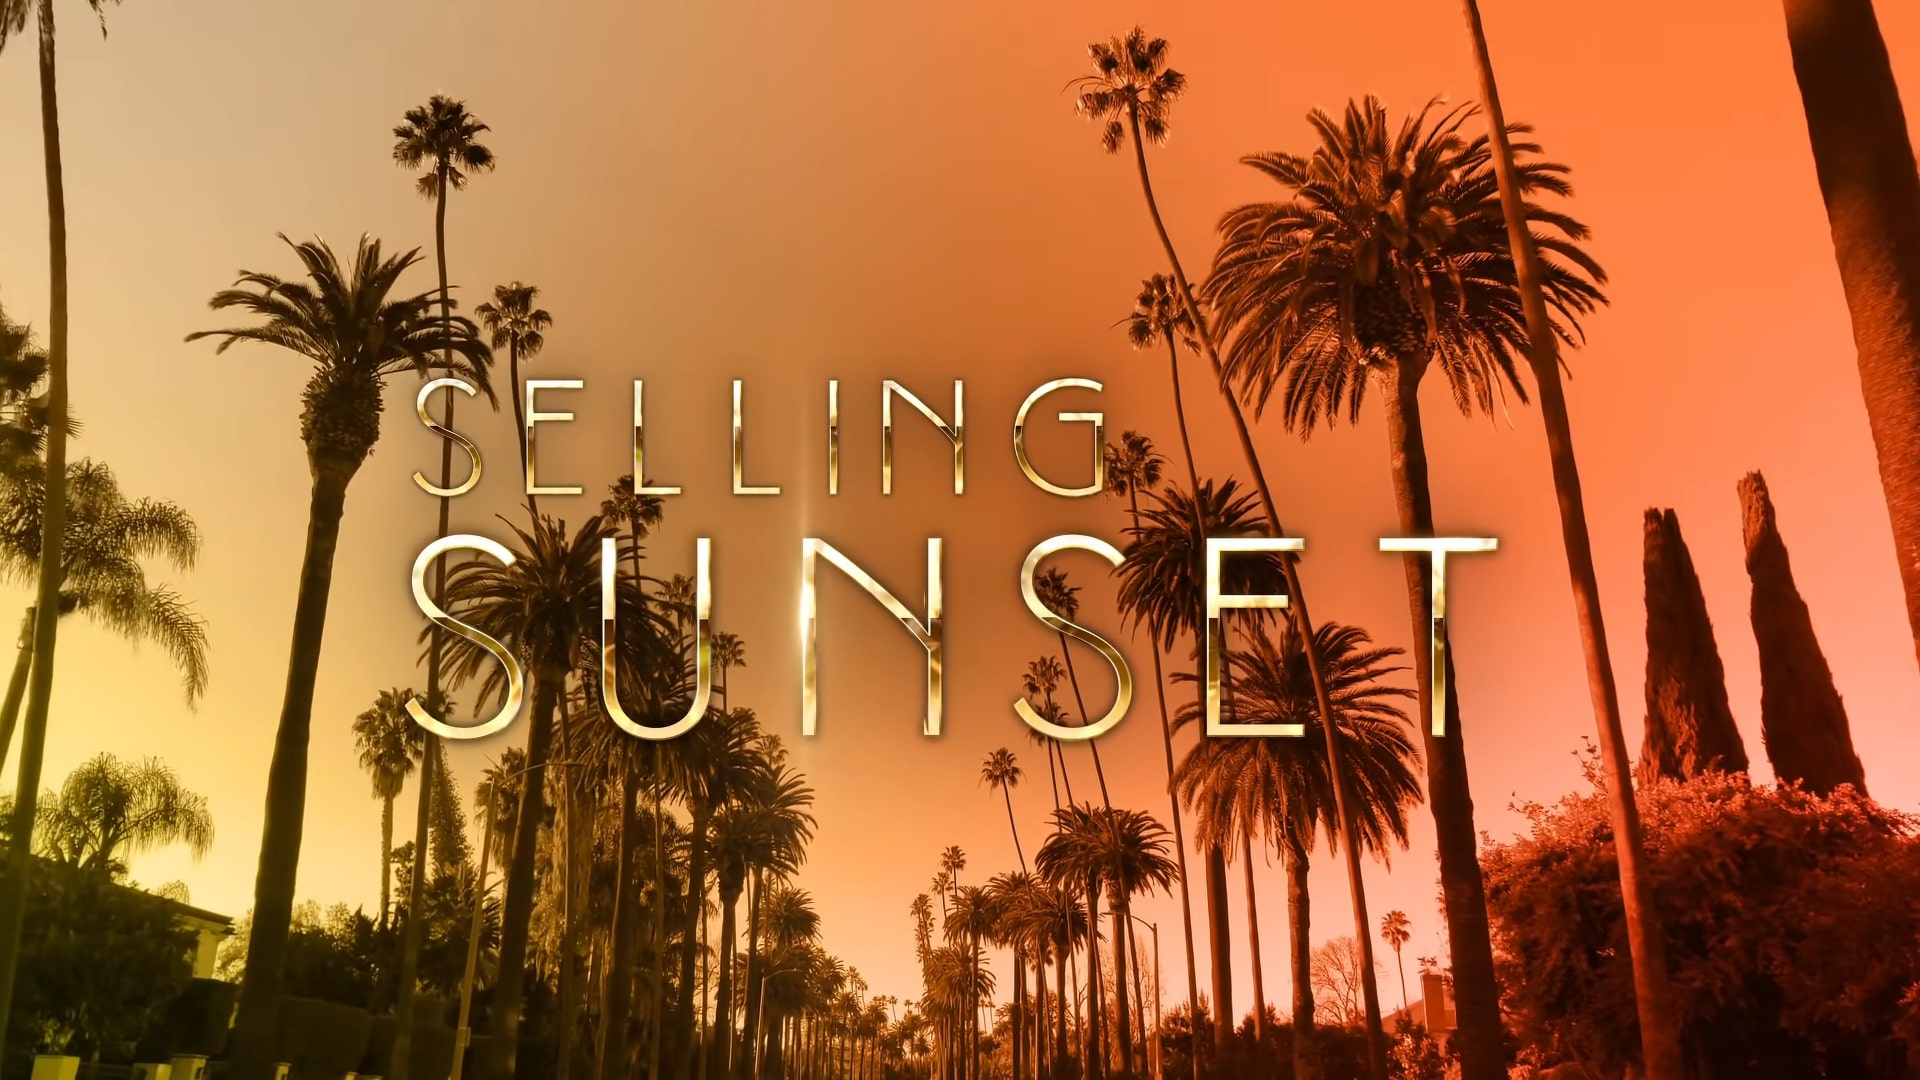 Netflix Selling Sunset Season 4 Trailer, Coming to Netflix in November 2021